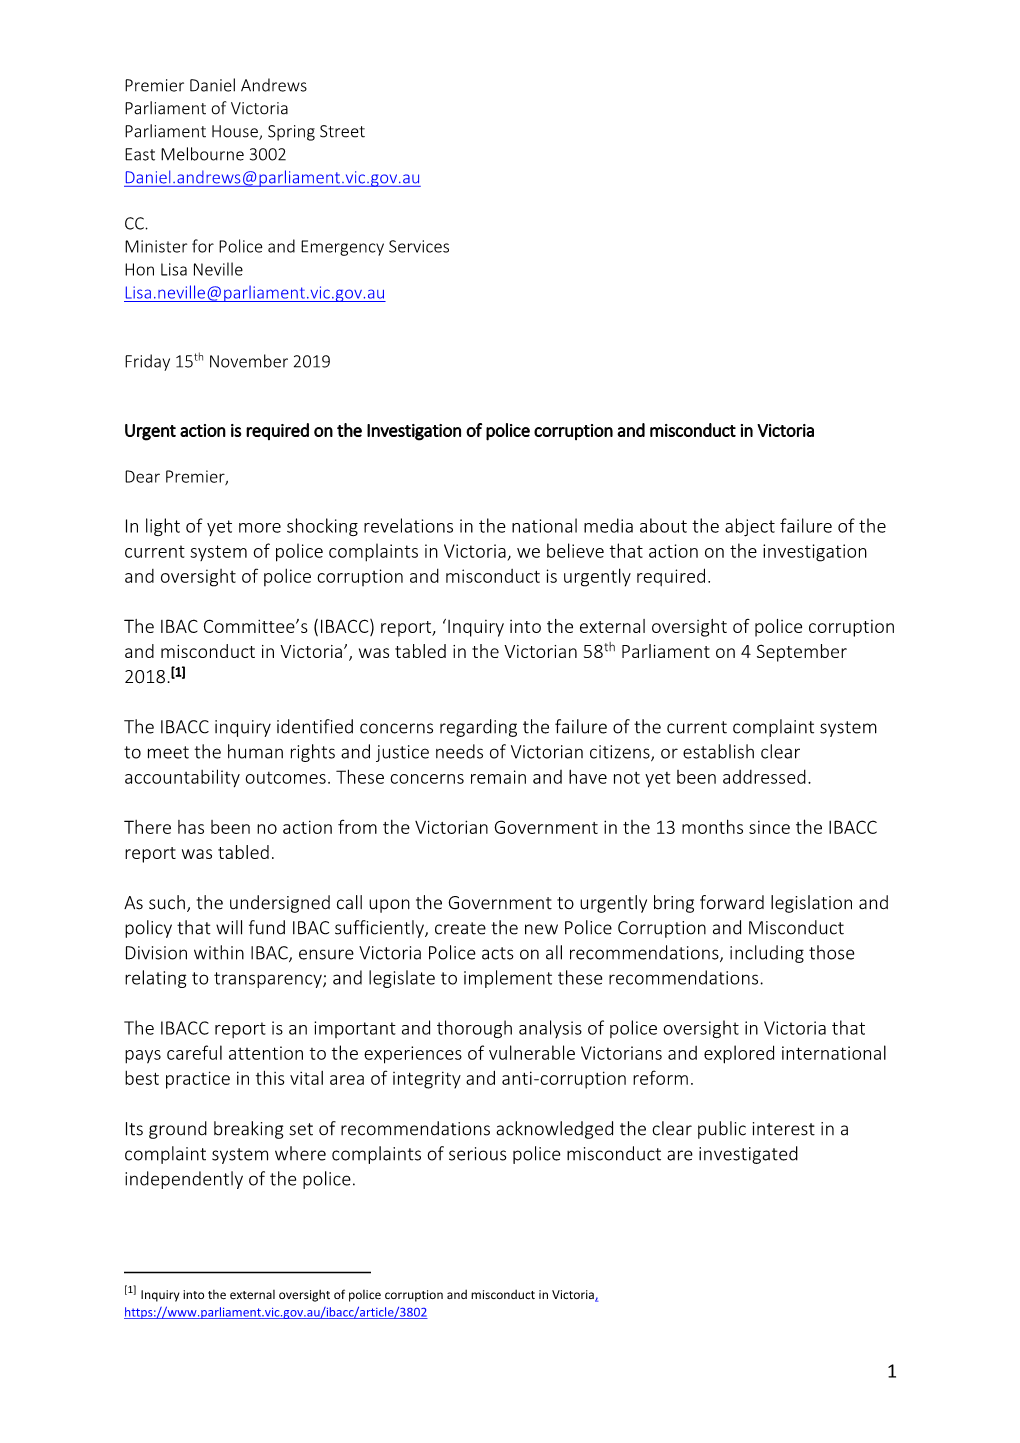 Open Letter to Premier Daniel Andrews 2019, Investigation Of